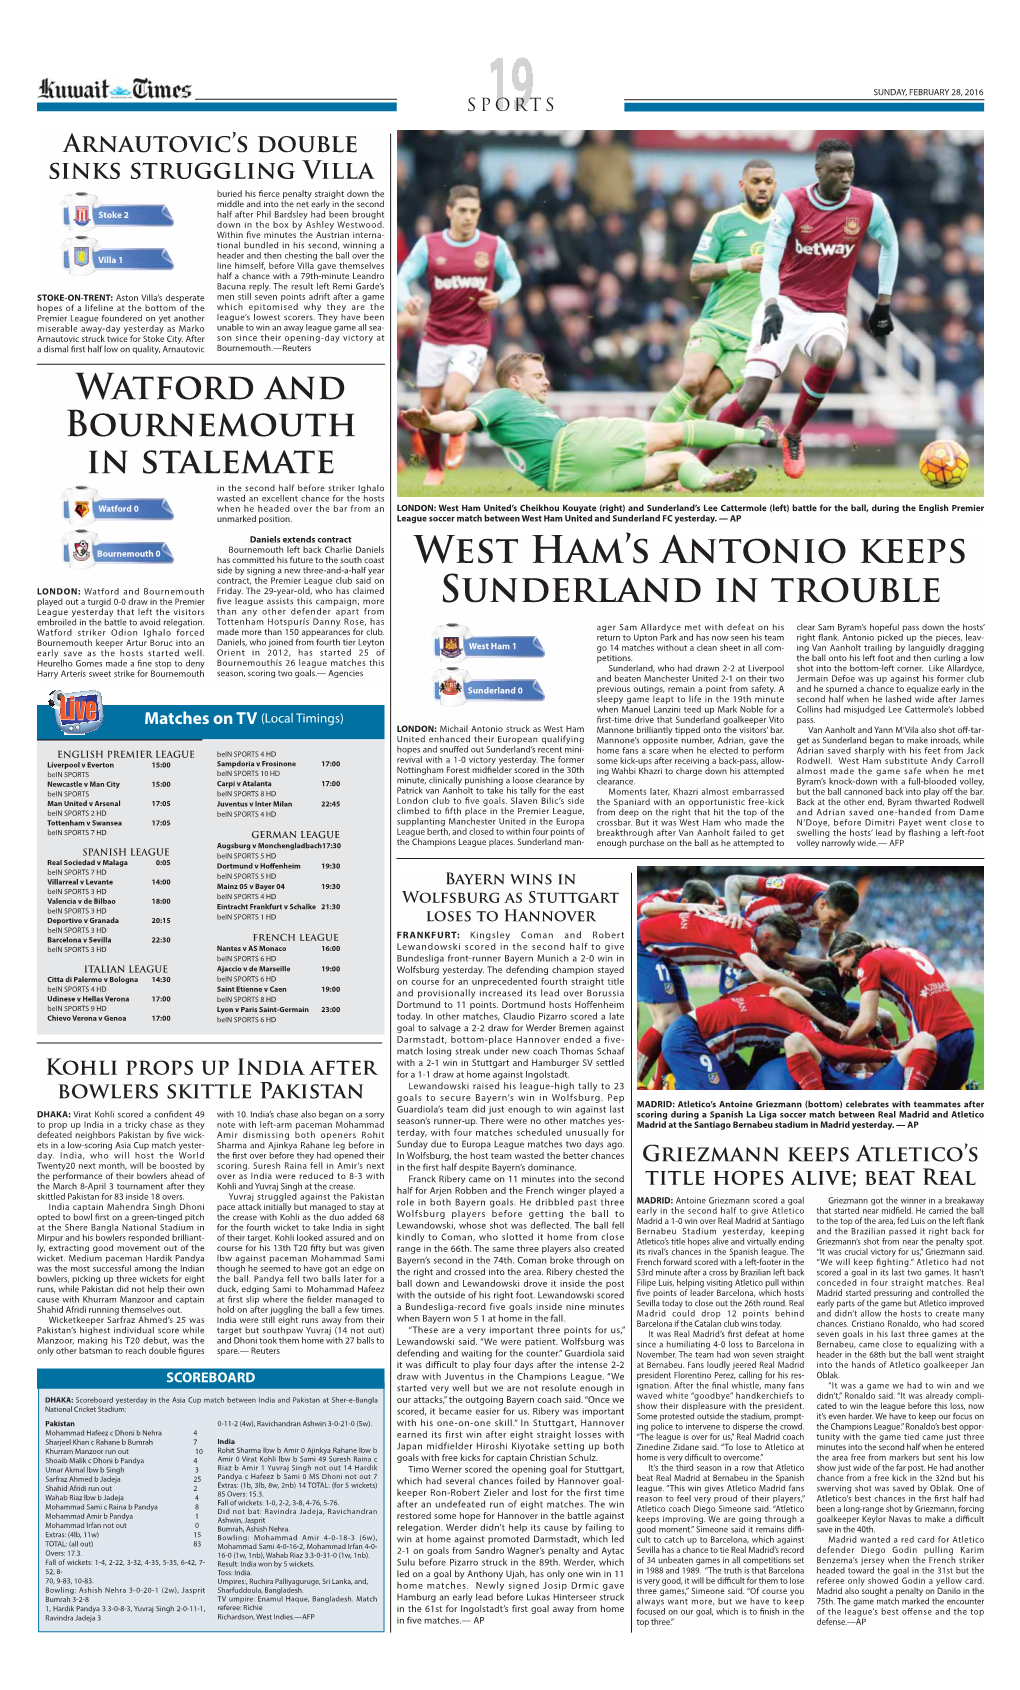 West Ham's Antonio Keeps Sunderland in Trouble